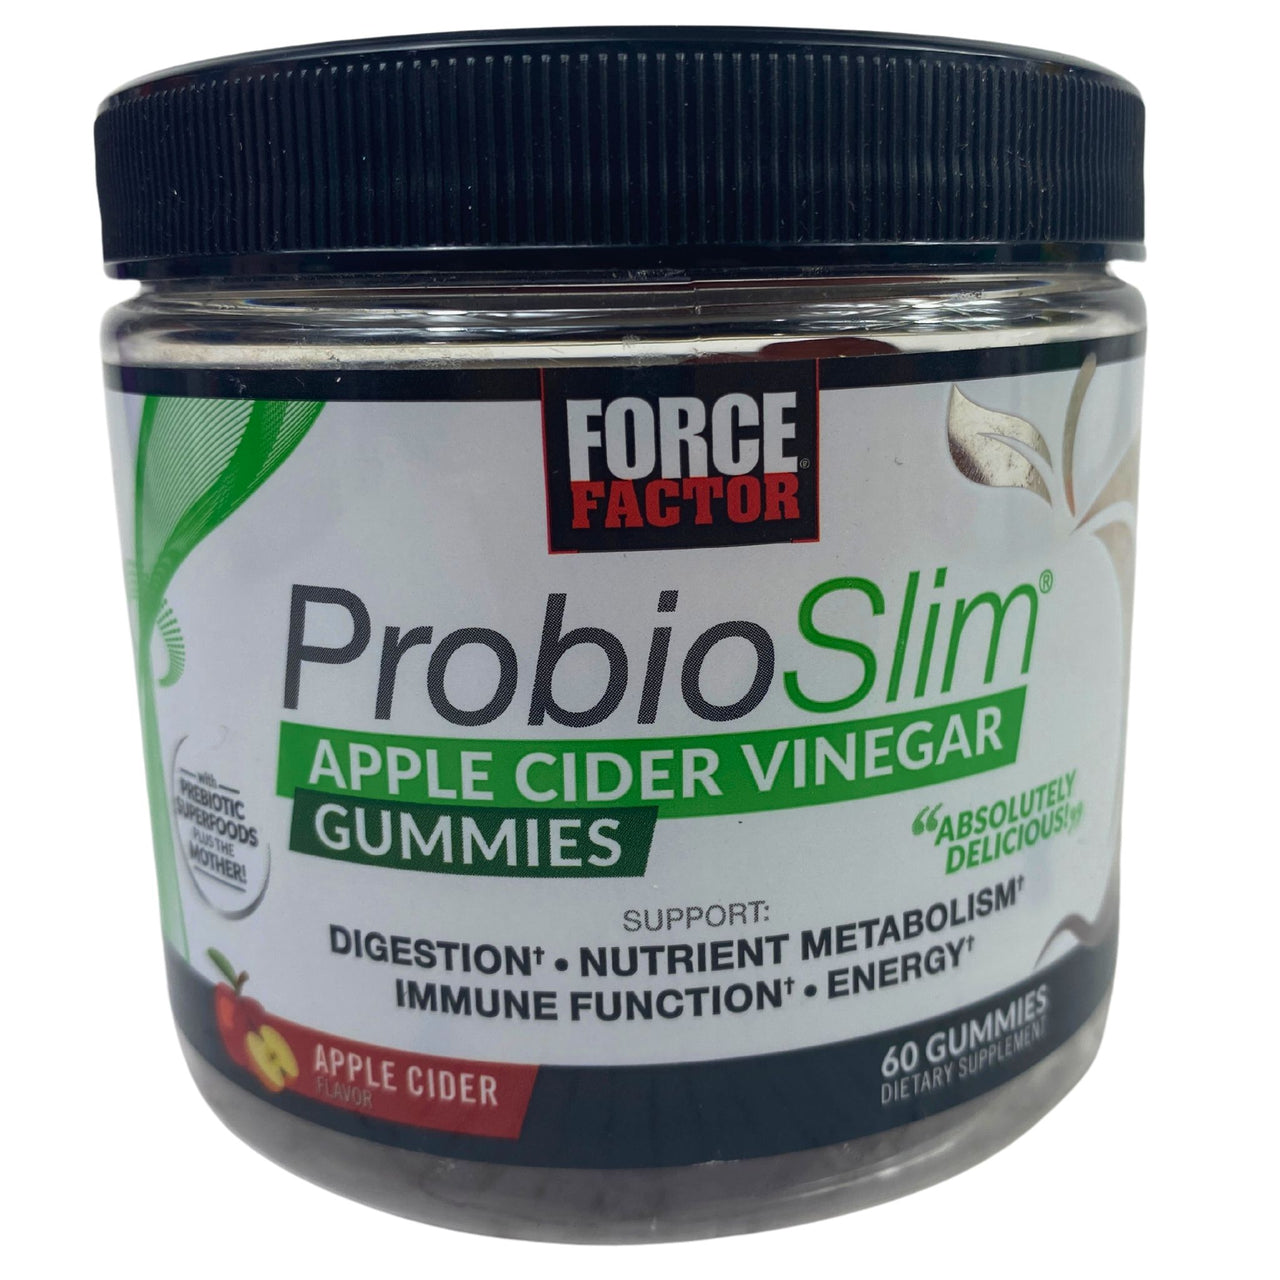 Force Factor Probio Slim Apple Cider Vinegar Gummies Supports Digestion